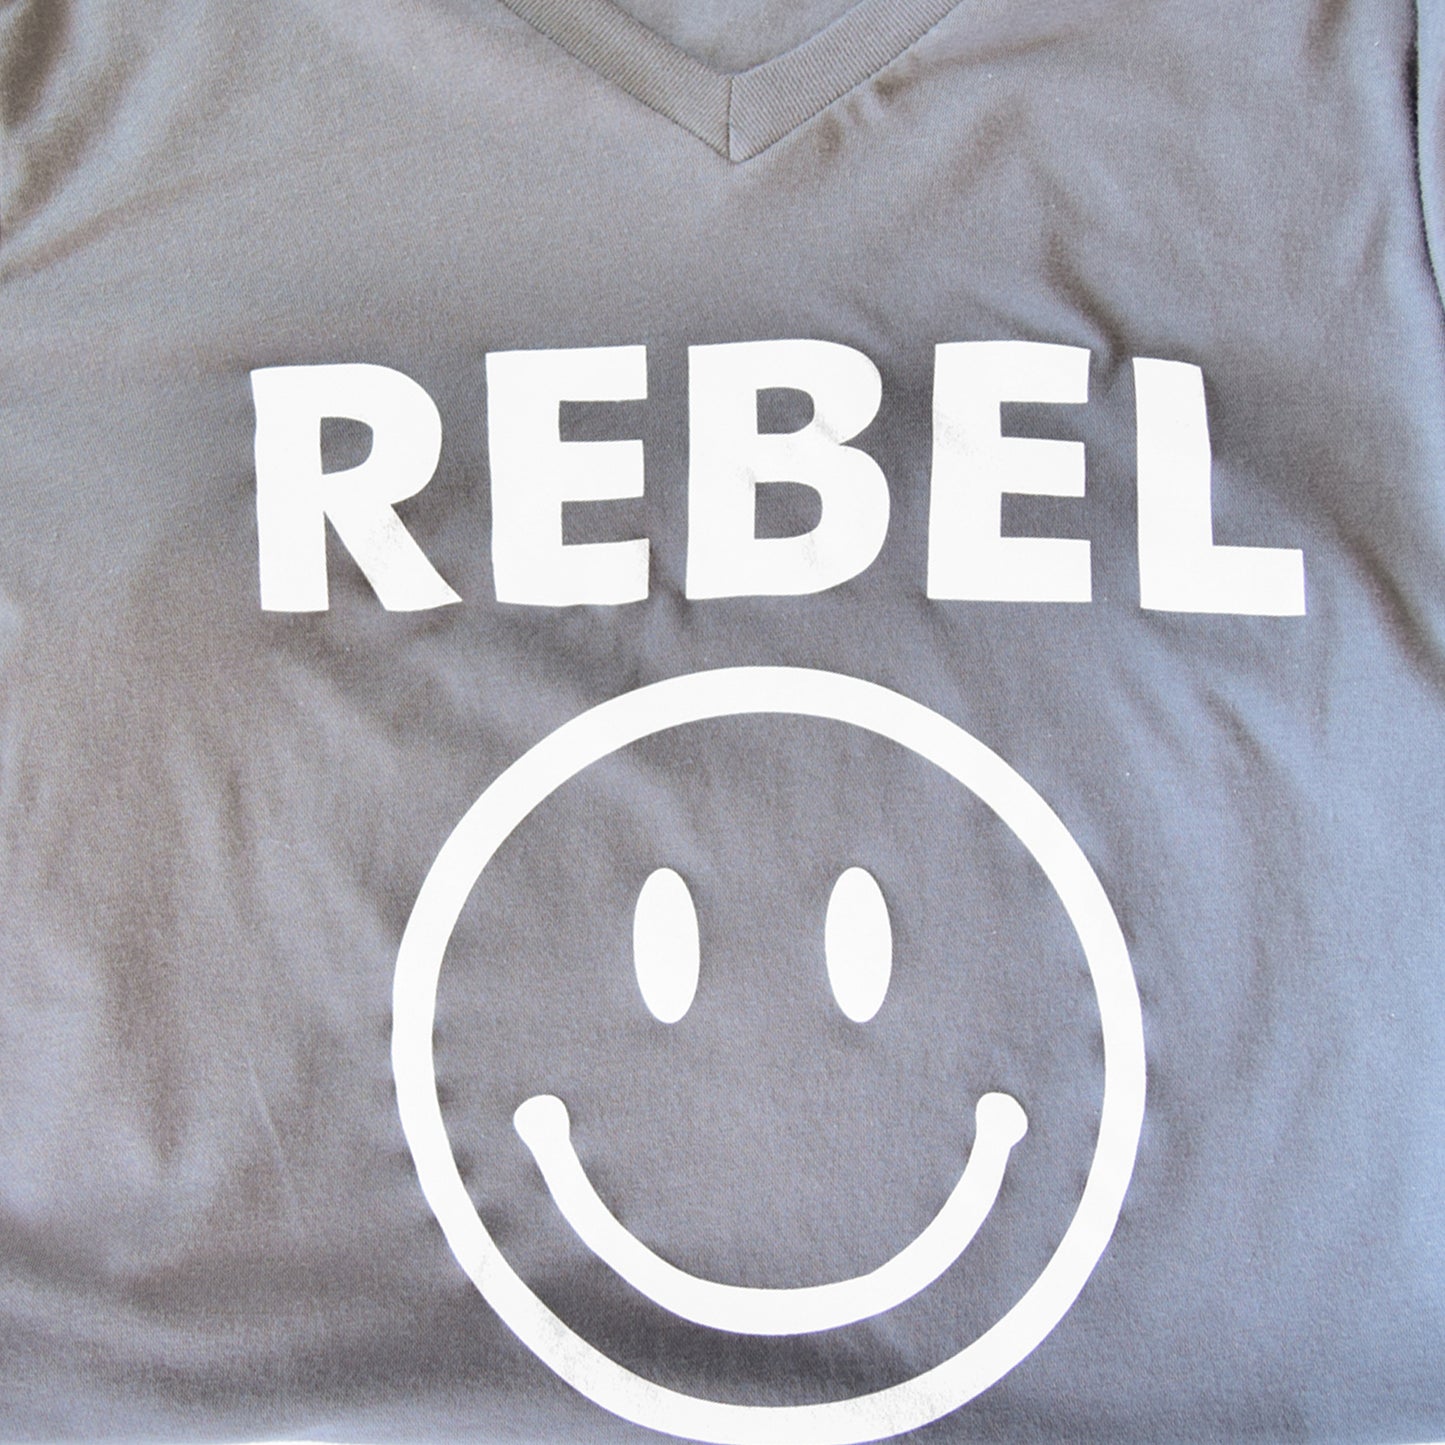 Rebel Smiley V-Neck Tee